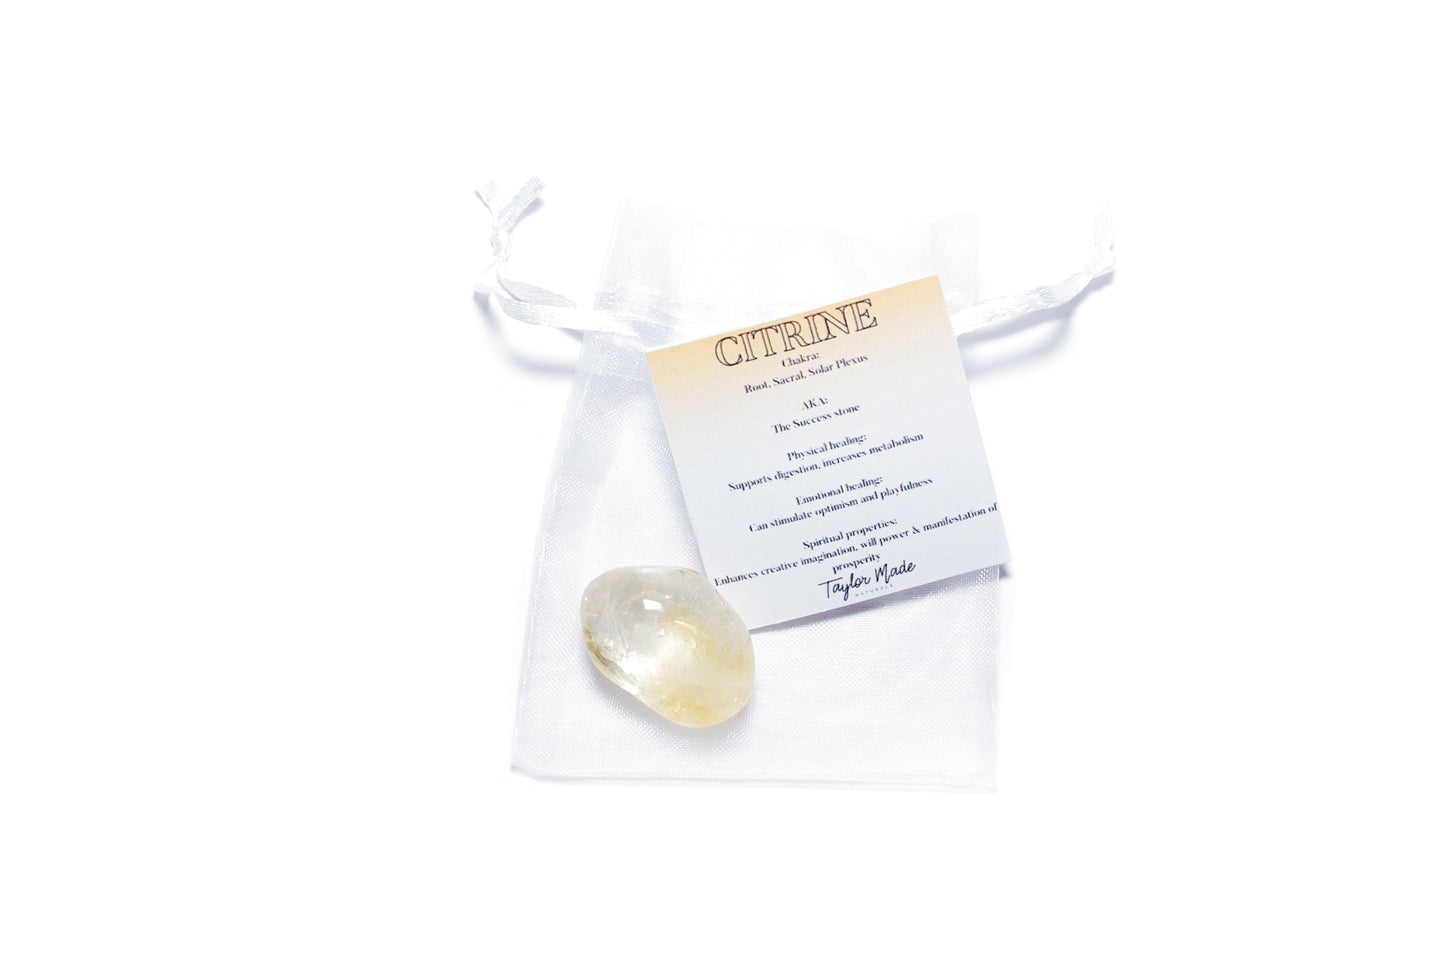 Citrine Crystal